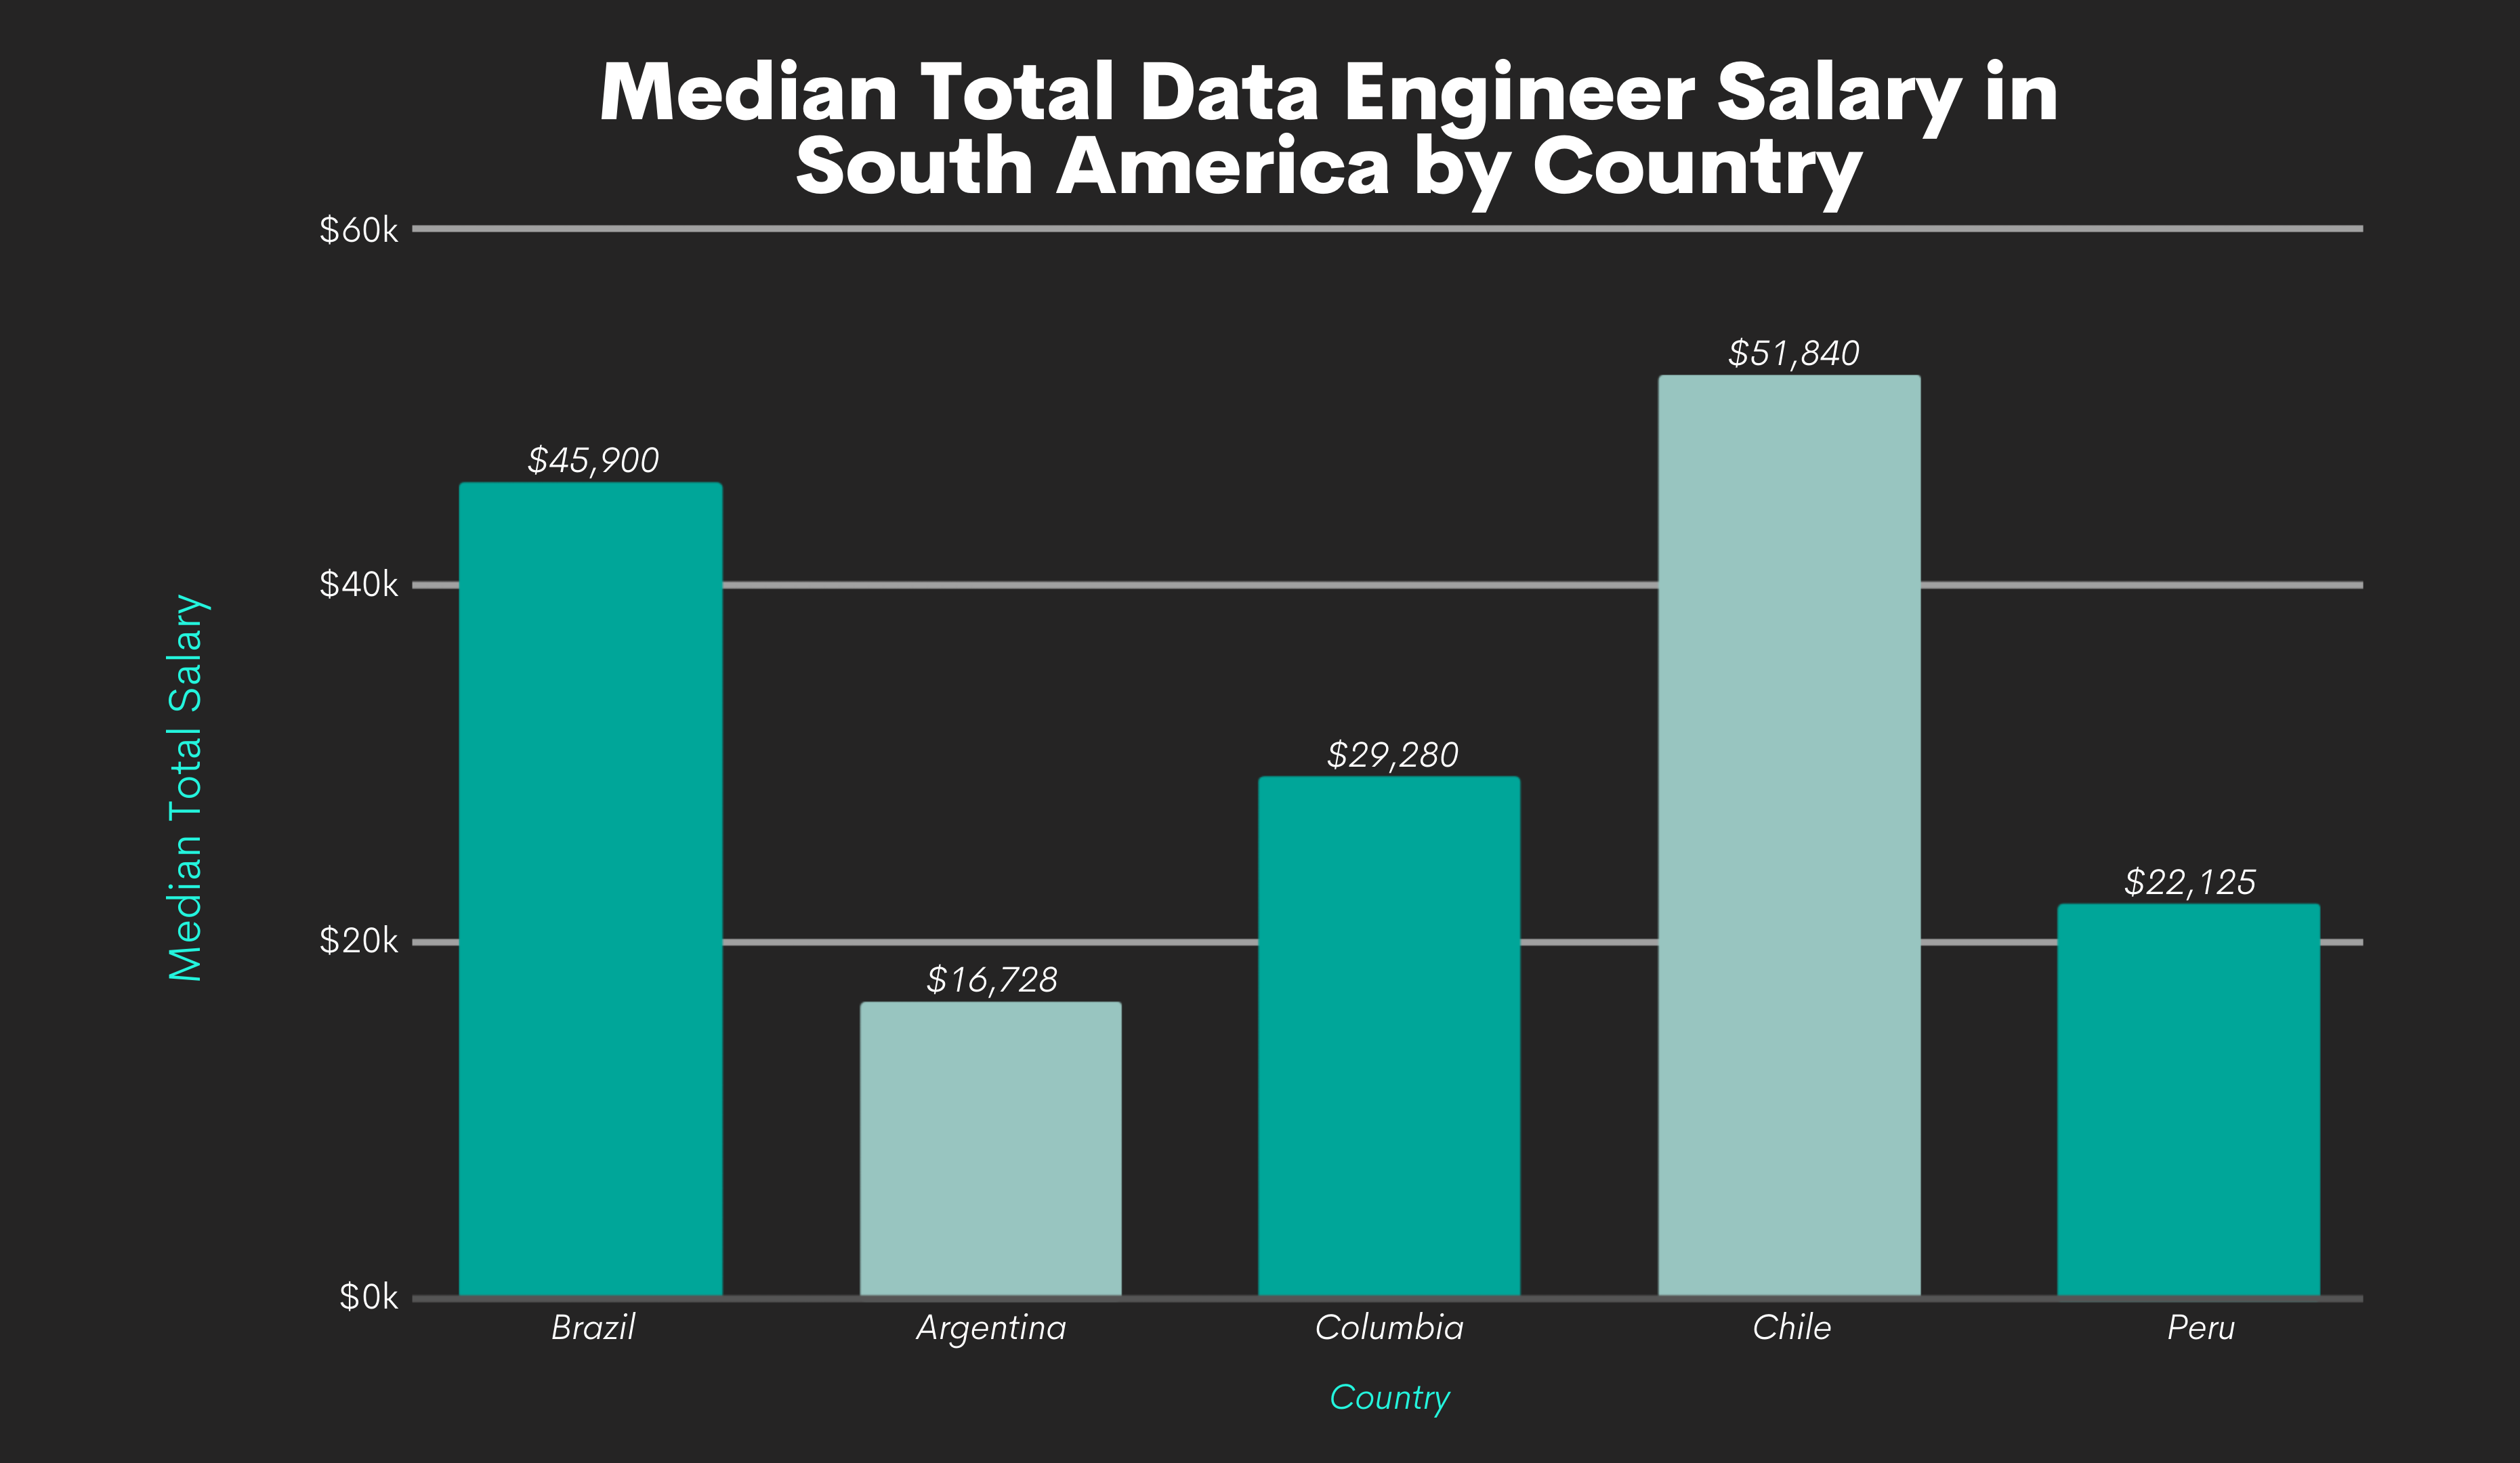 Data Engineer Salaries by South America